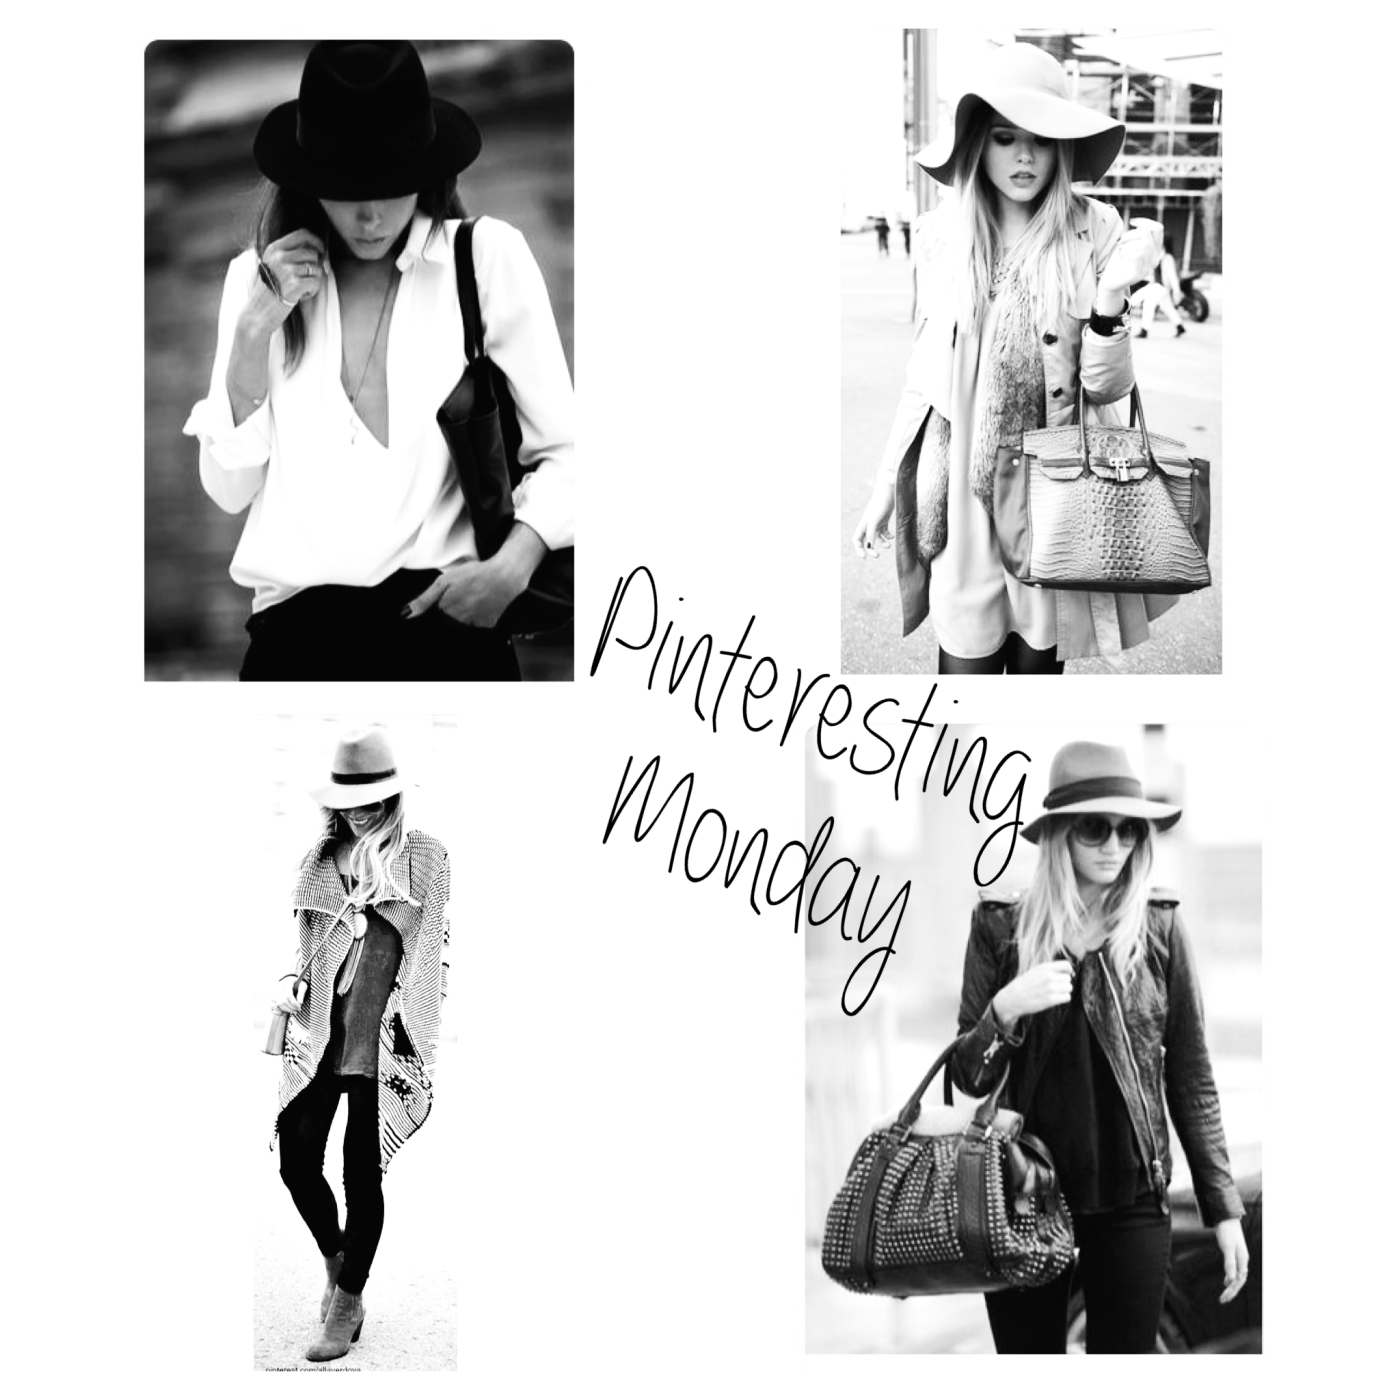 Pinteresting Monday on Beautitude - Fashion inspiration from Pinterest